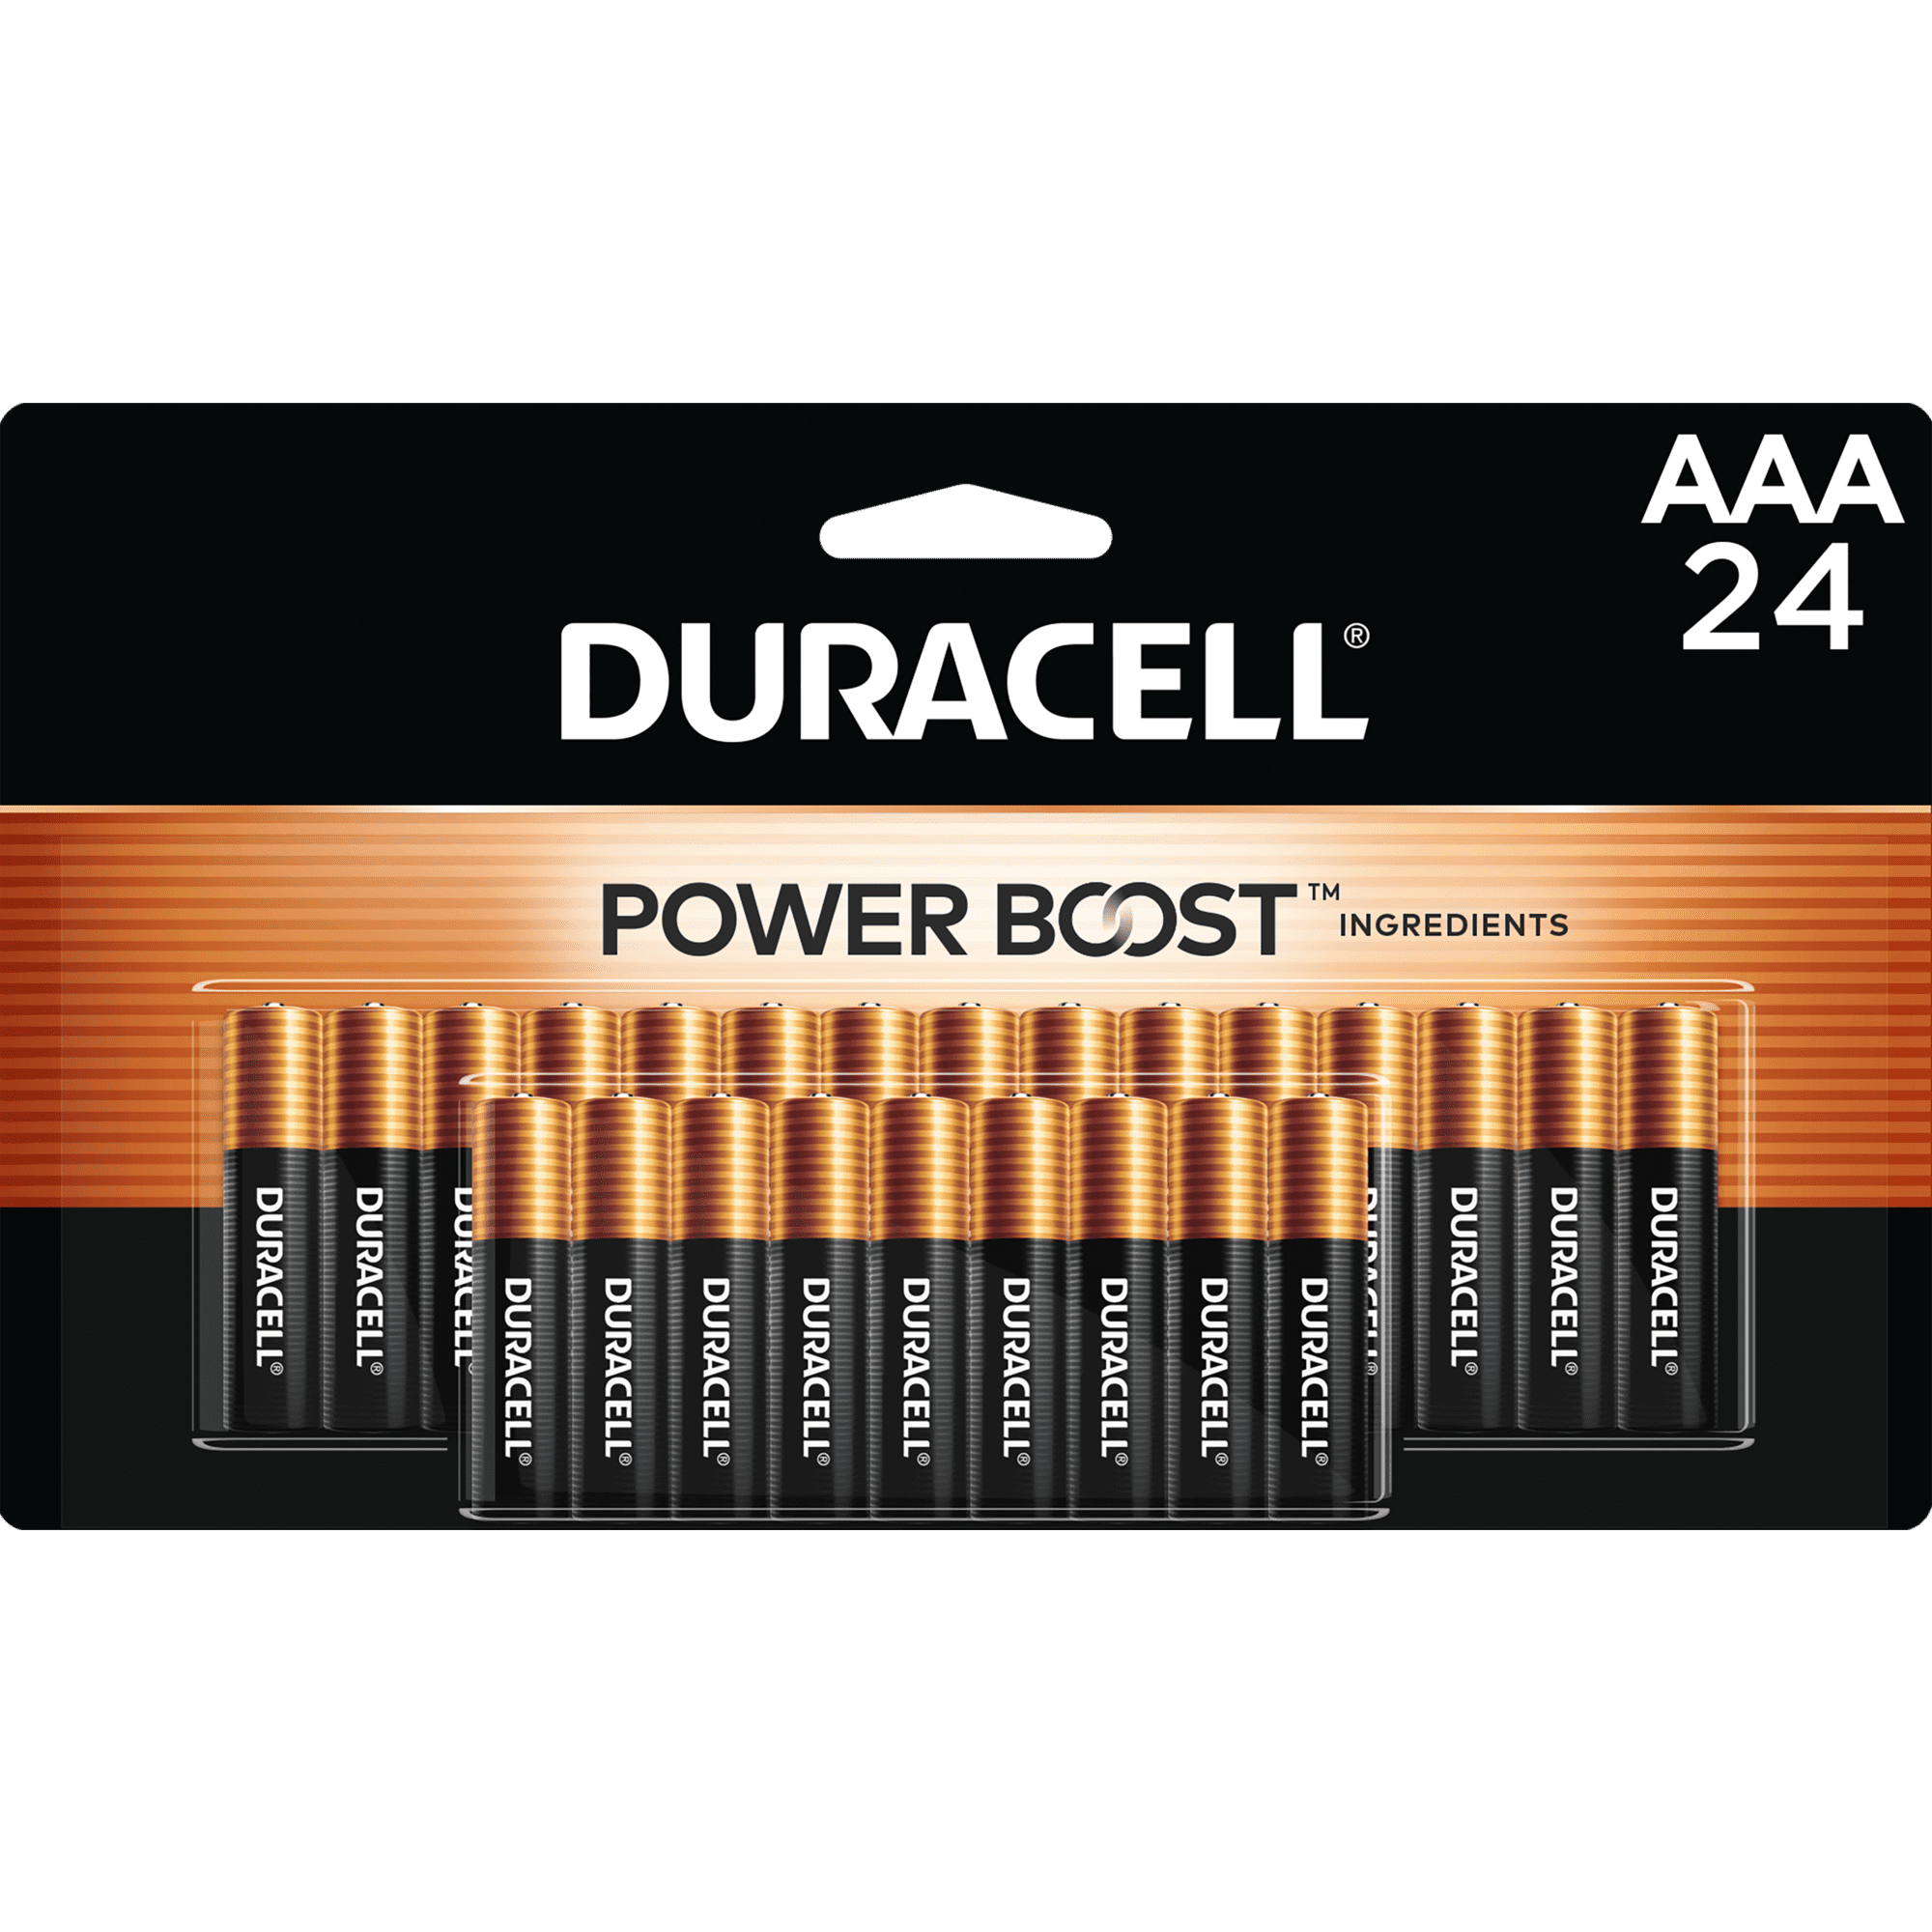 Duracell CopperTop AAA Alkaline Batteries - 24 Pack